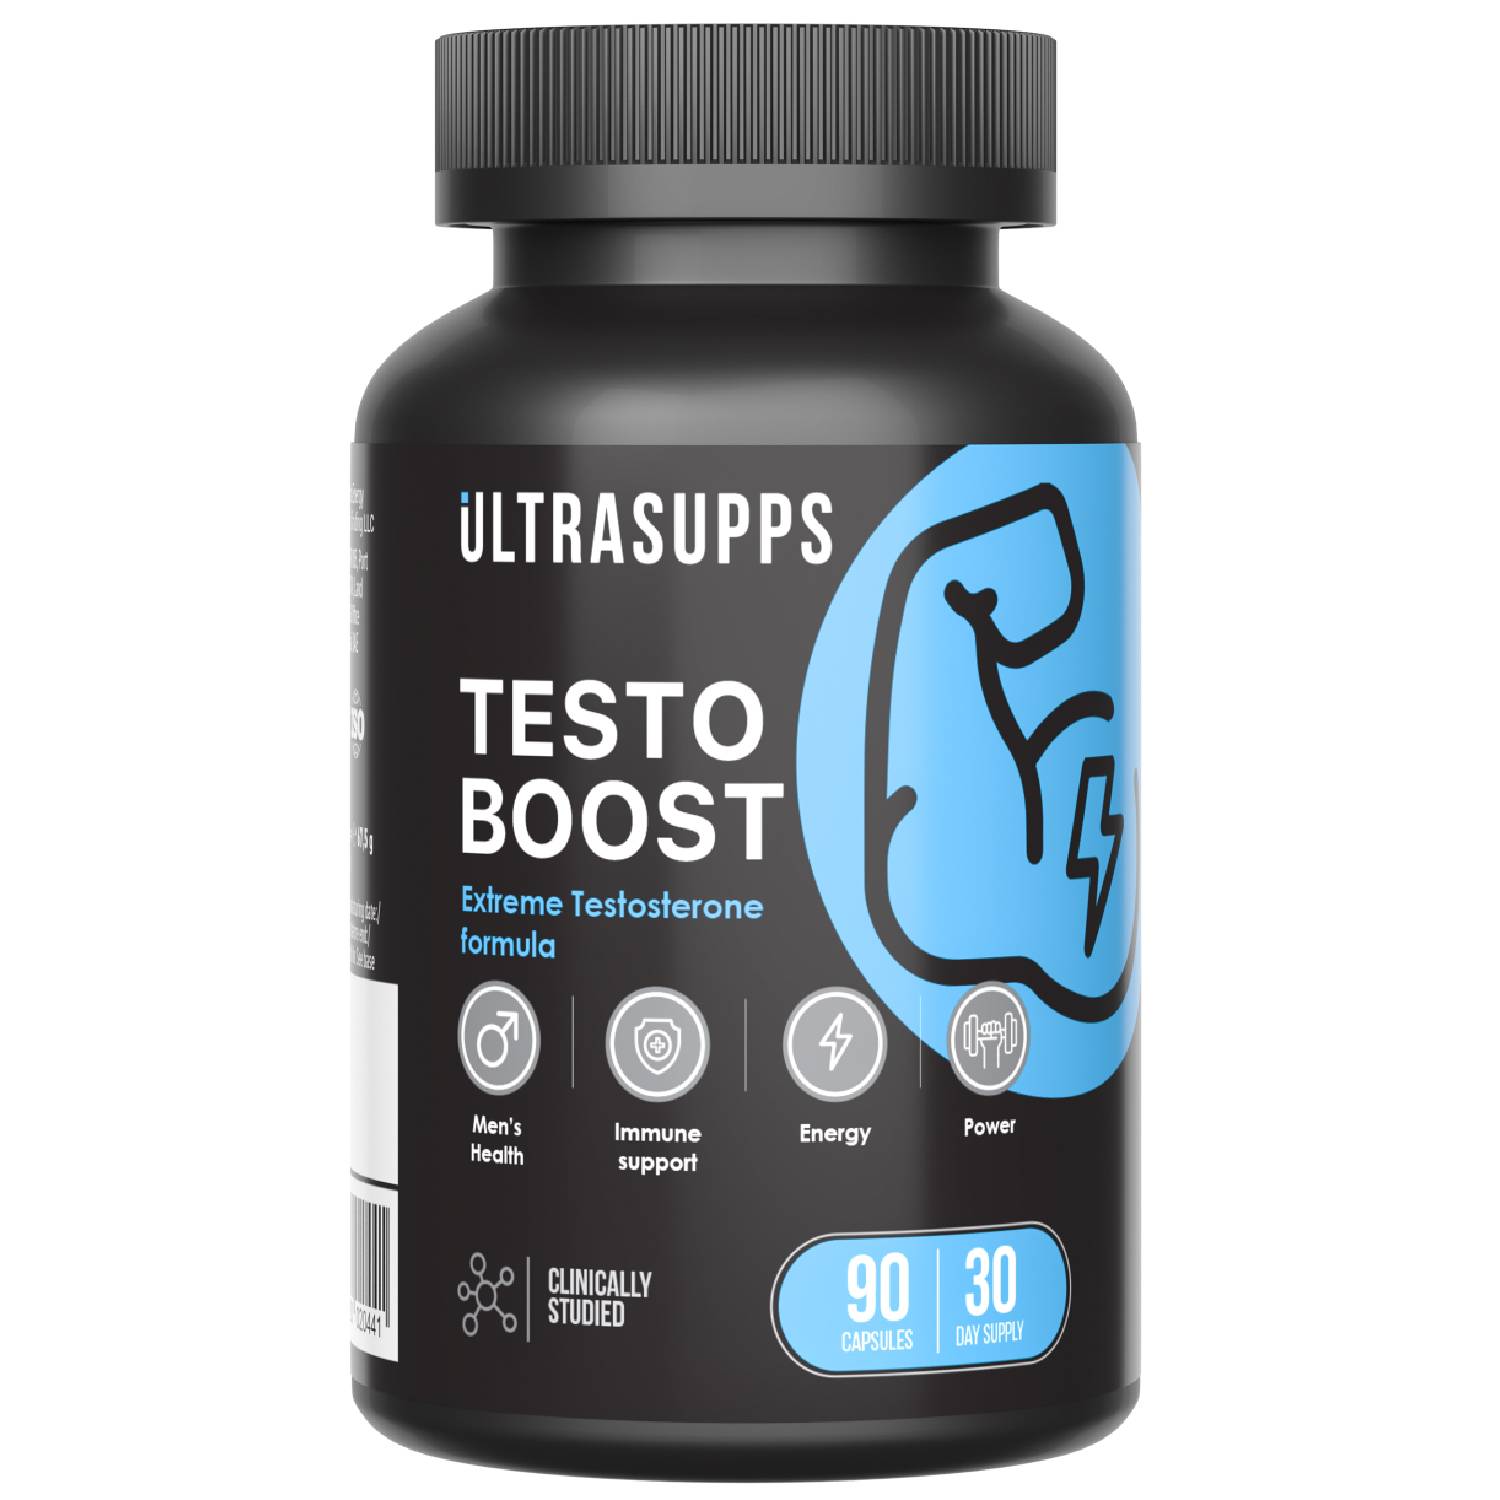 Ultrasupps Комплекс для повышения тестостерона Testoboost, 90 капсул (Ultrasupps, )